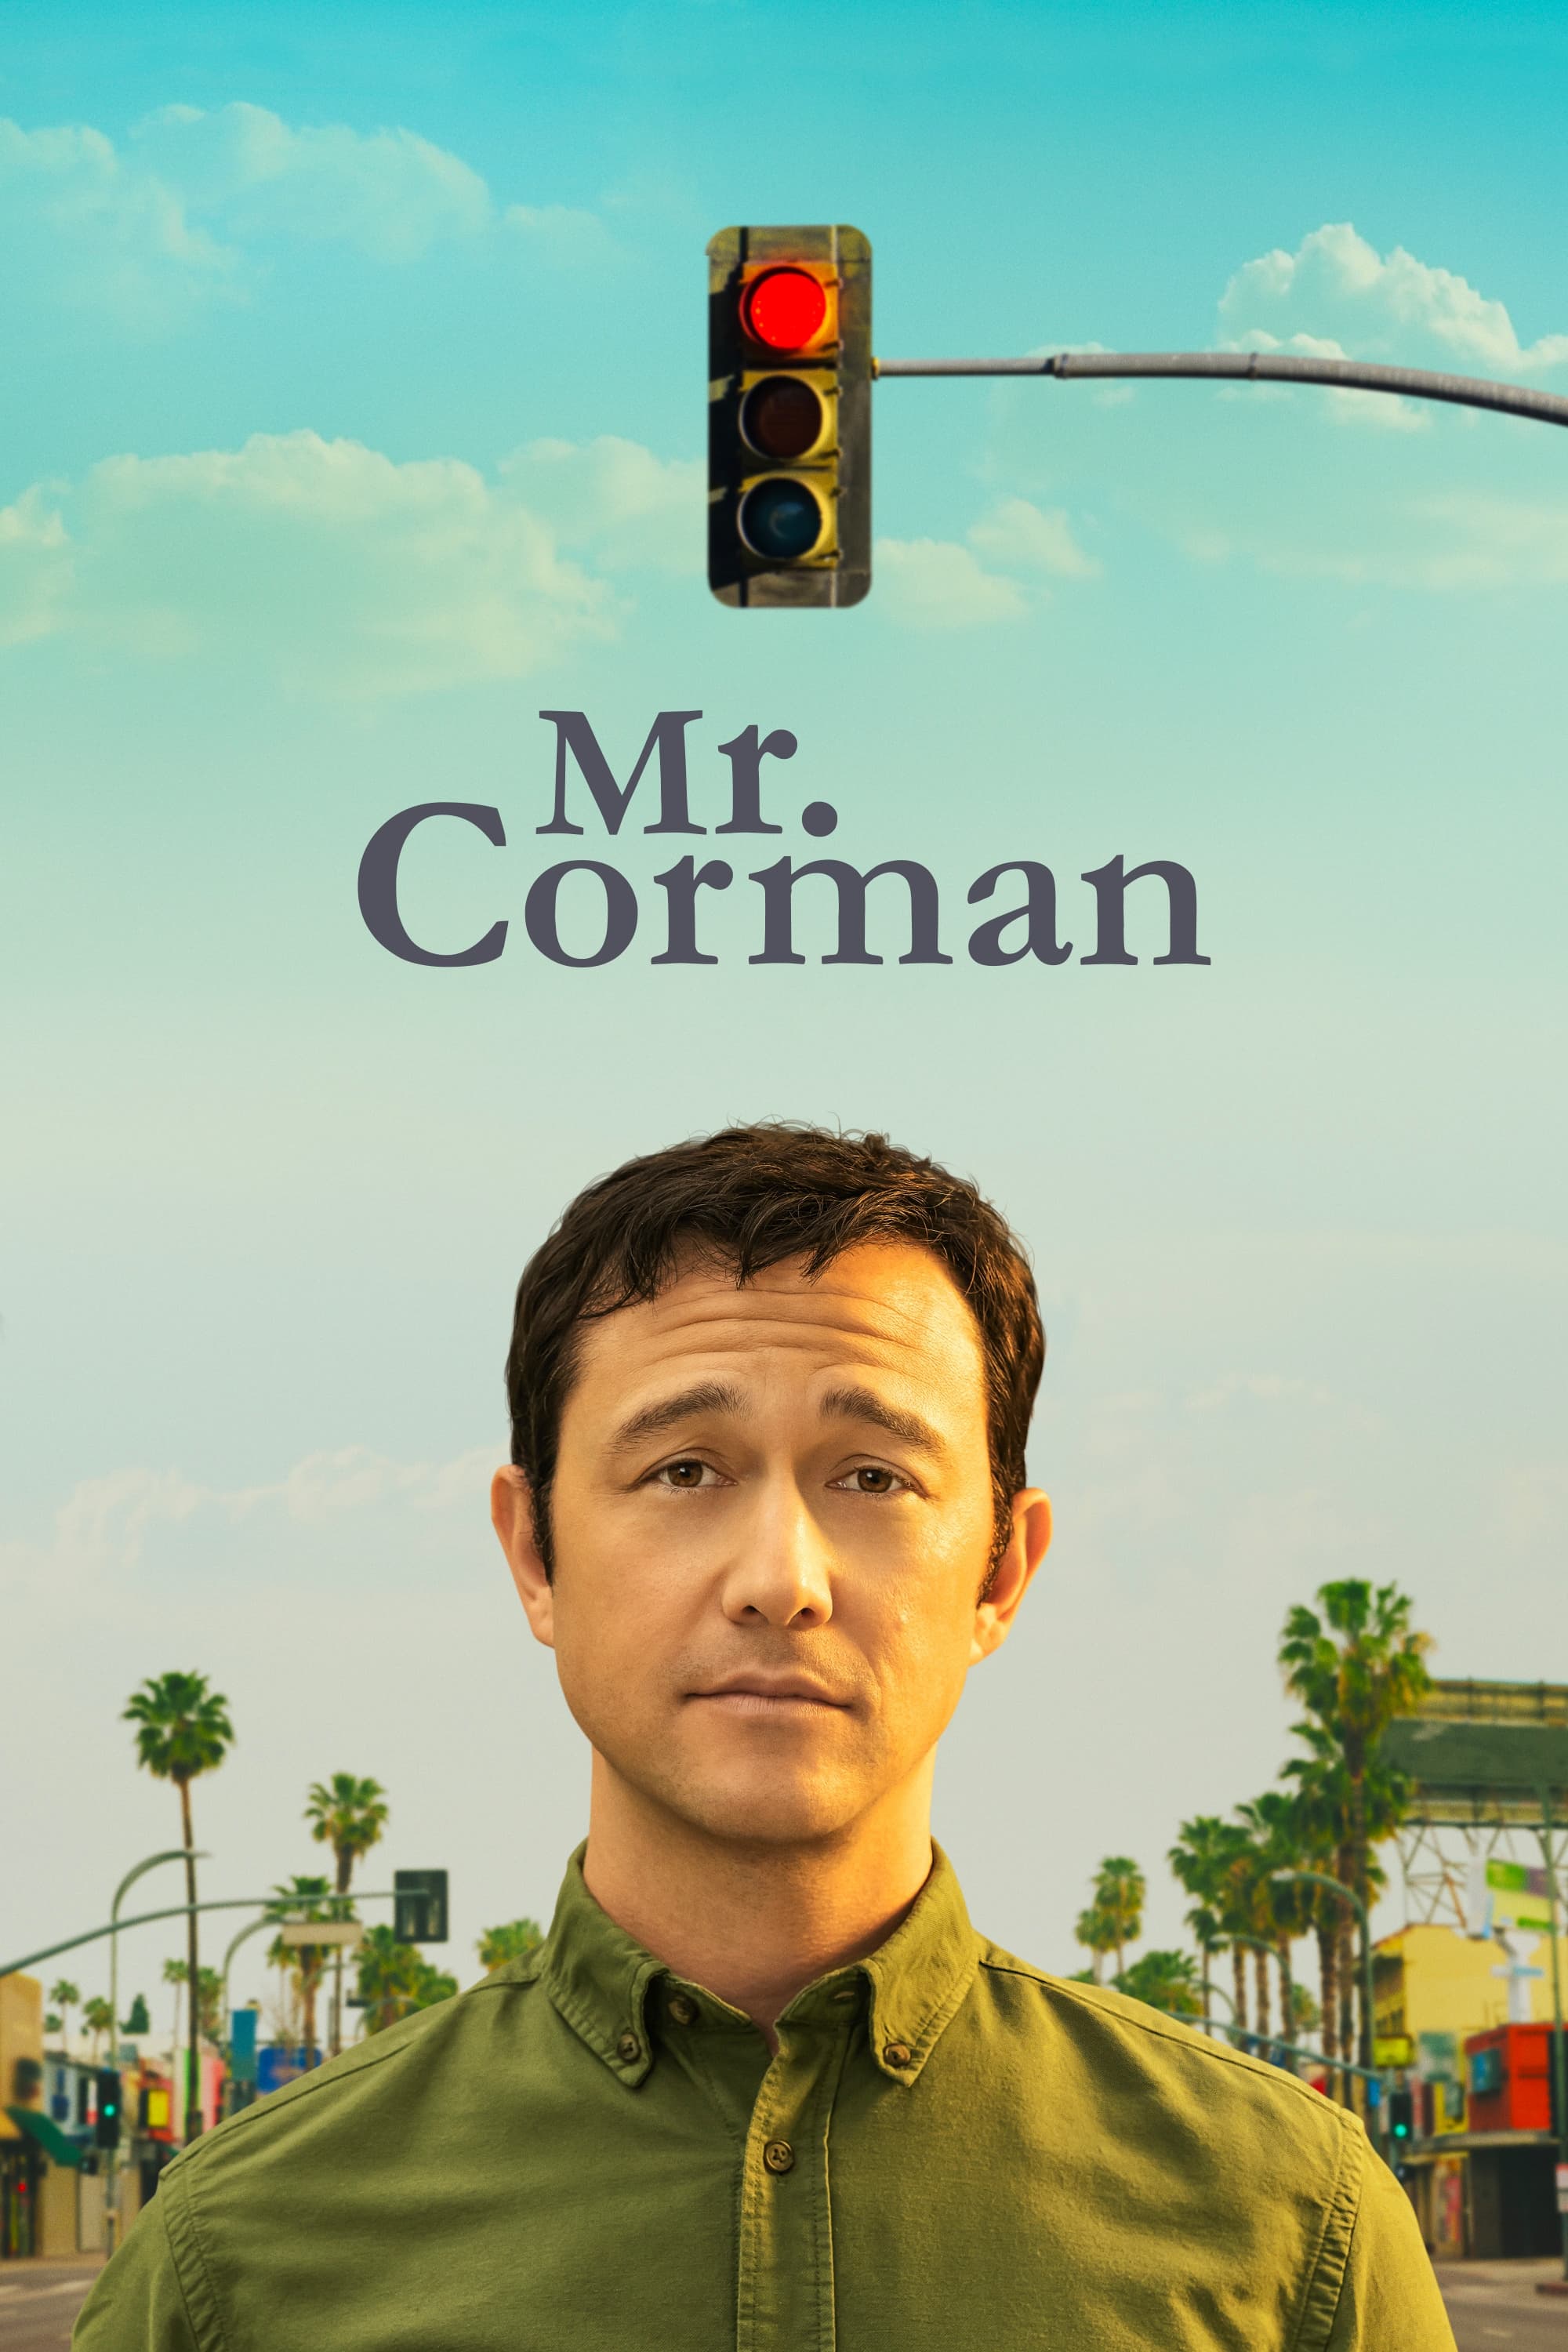 Mr. Corman TV Shows About Teacher